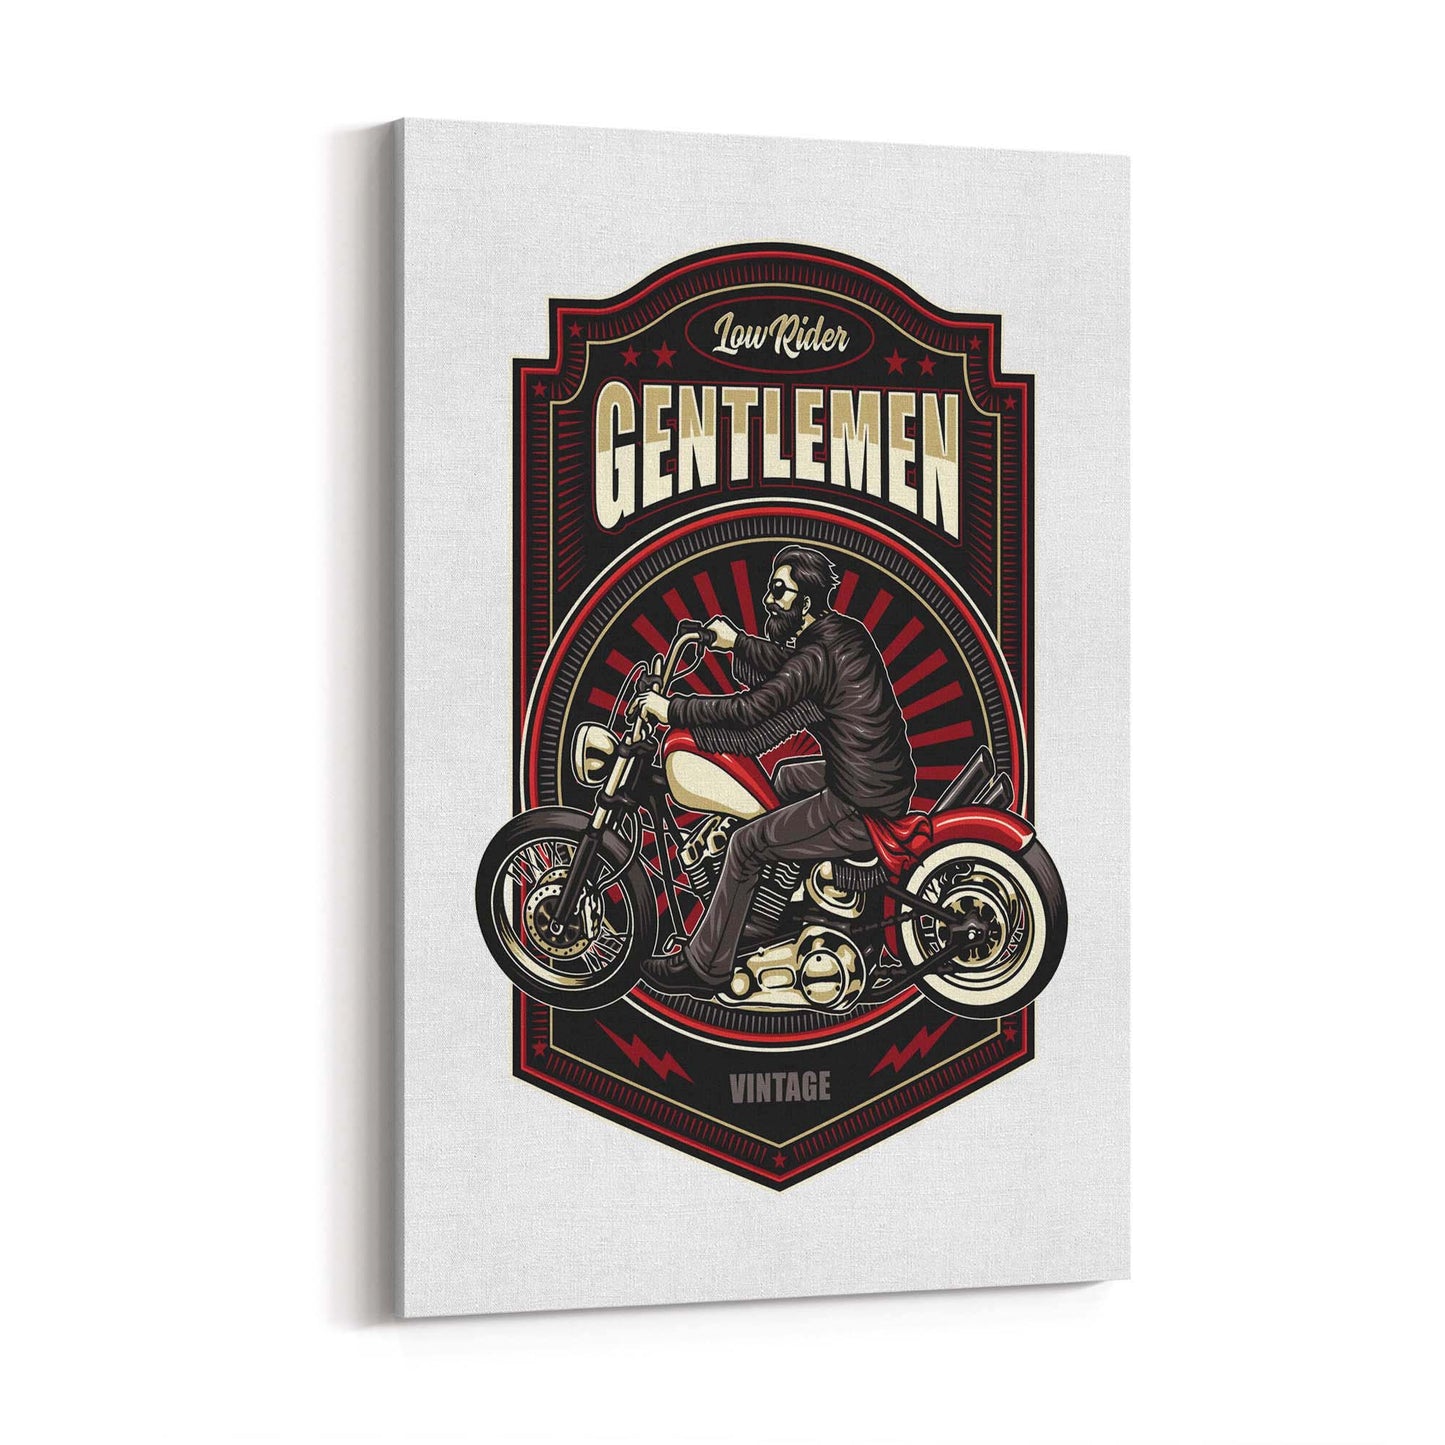 Gentlemen Biker Man Cave Motorcycle Wall Art - The Affordable Art Company